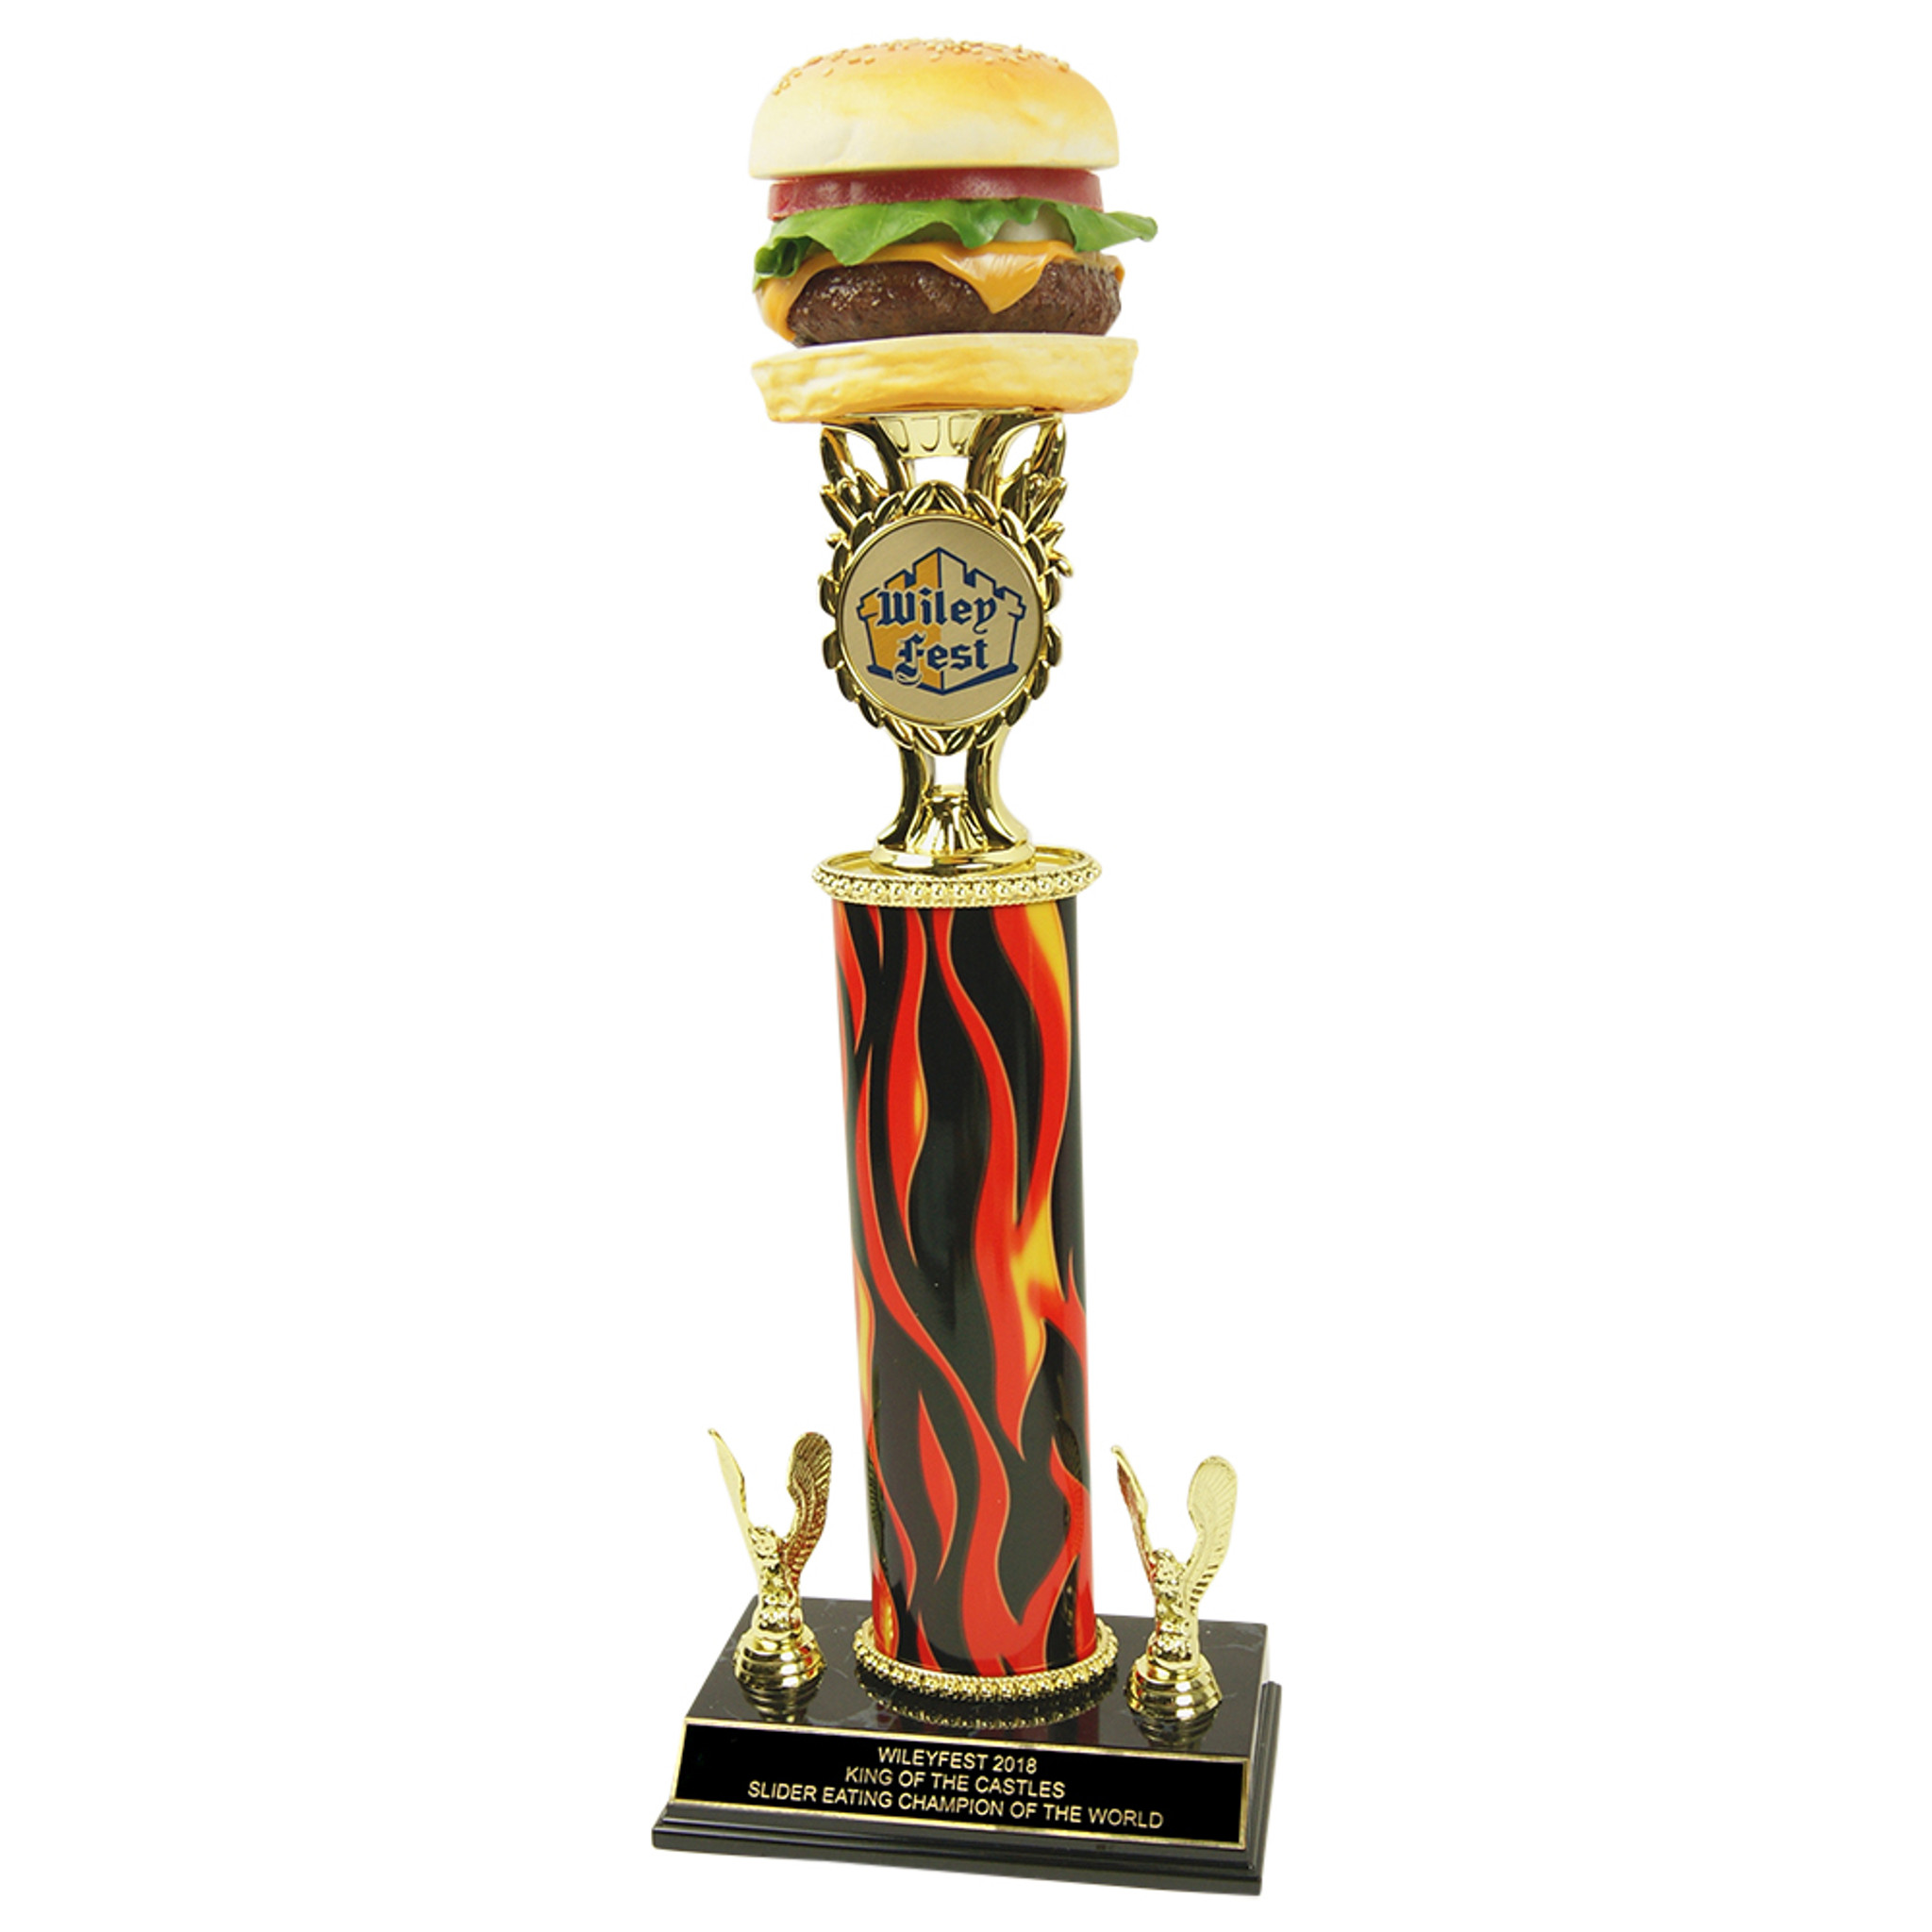 https://cdn11.bigcommerce.com/s-241f7/images/stencil/2048x2048/products/84/2900/Jumbo-Burger-hamburger-trophy__50967.1526839274.jpg?c=2